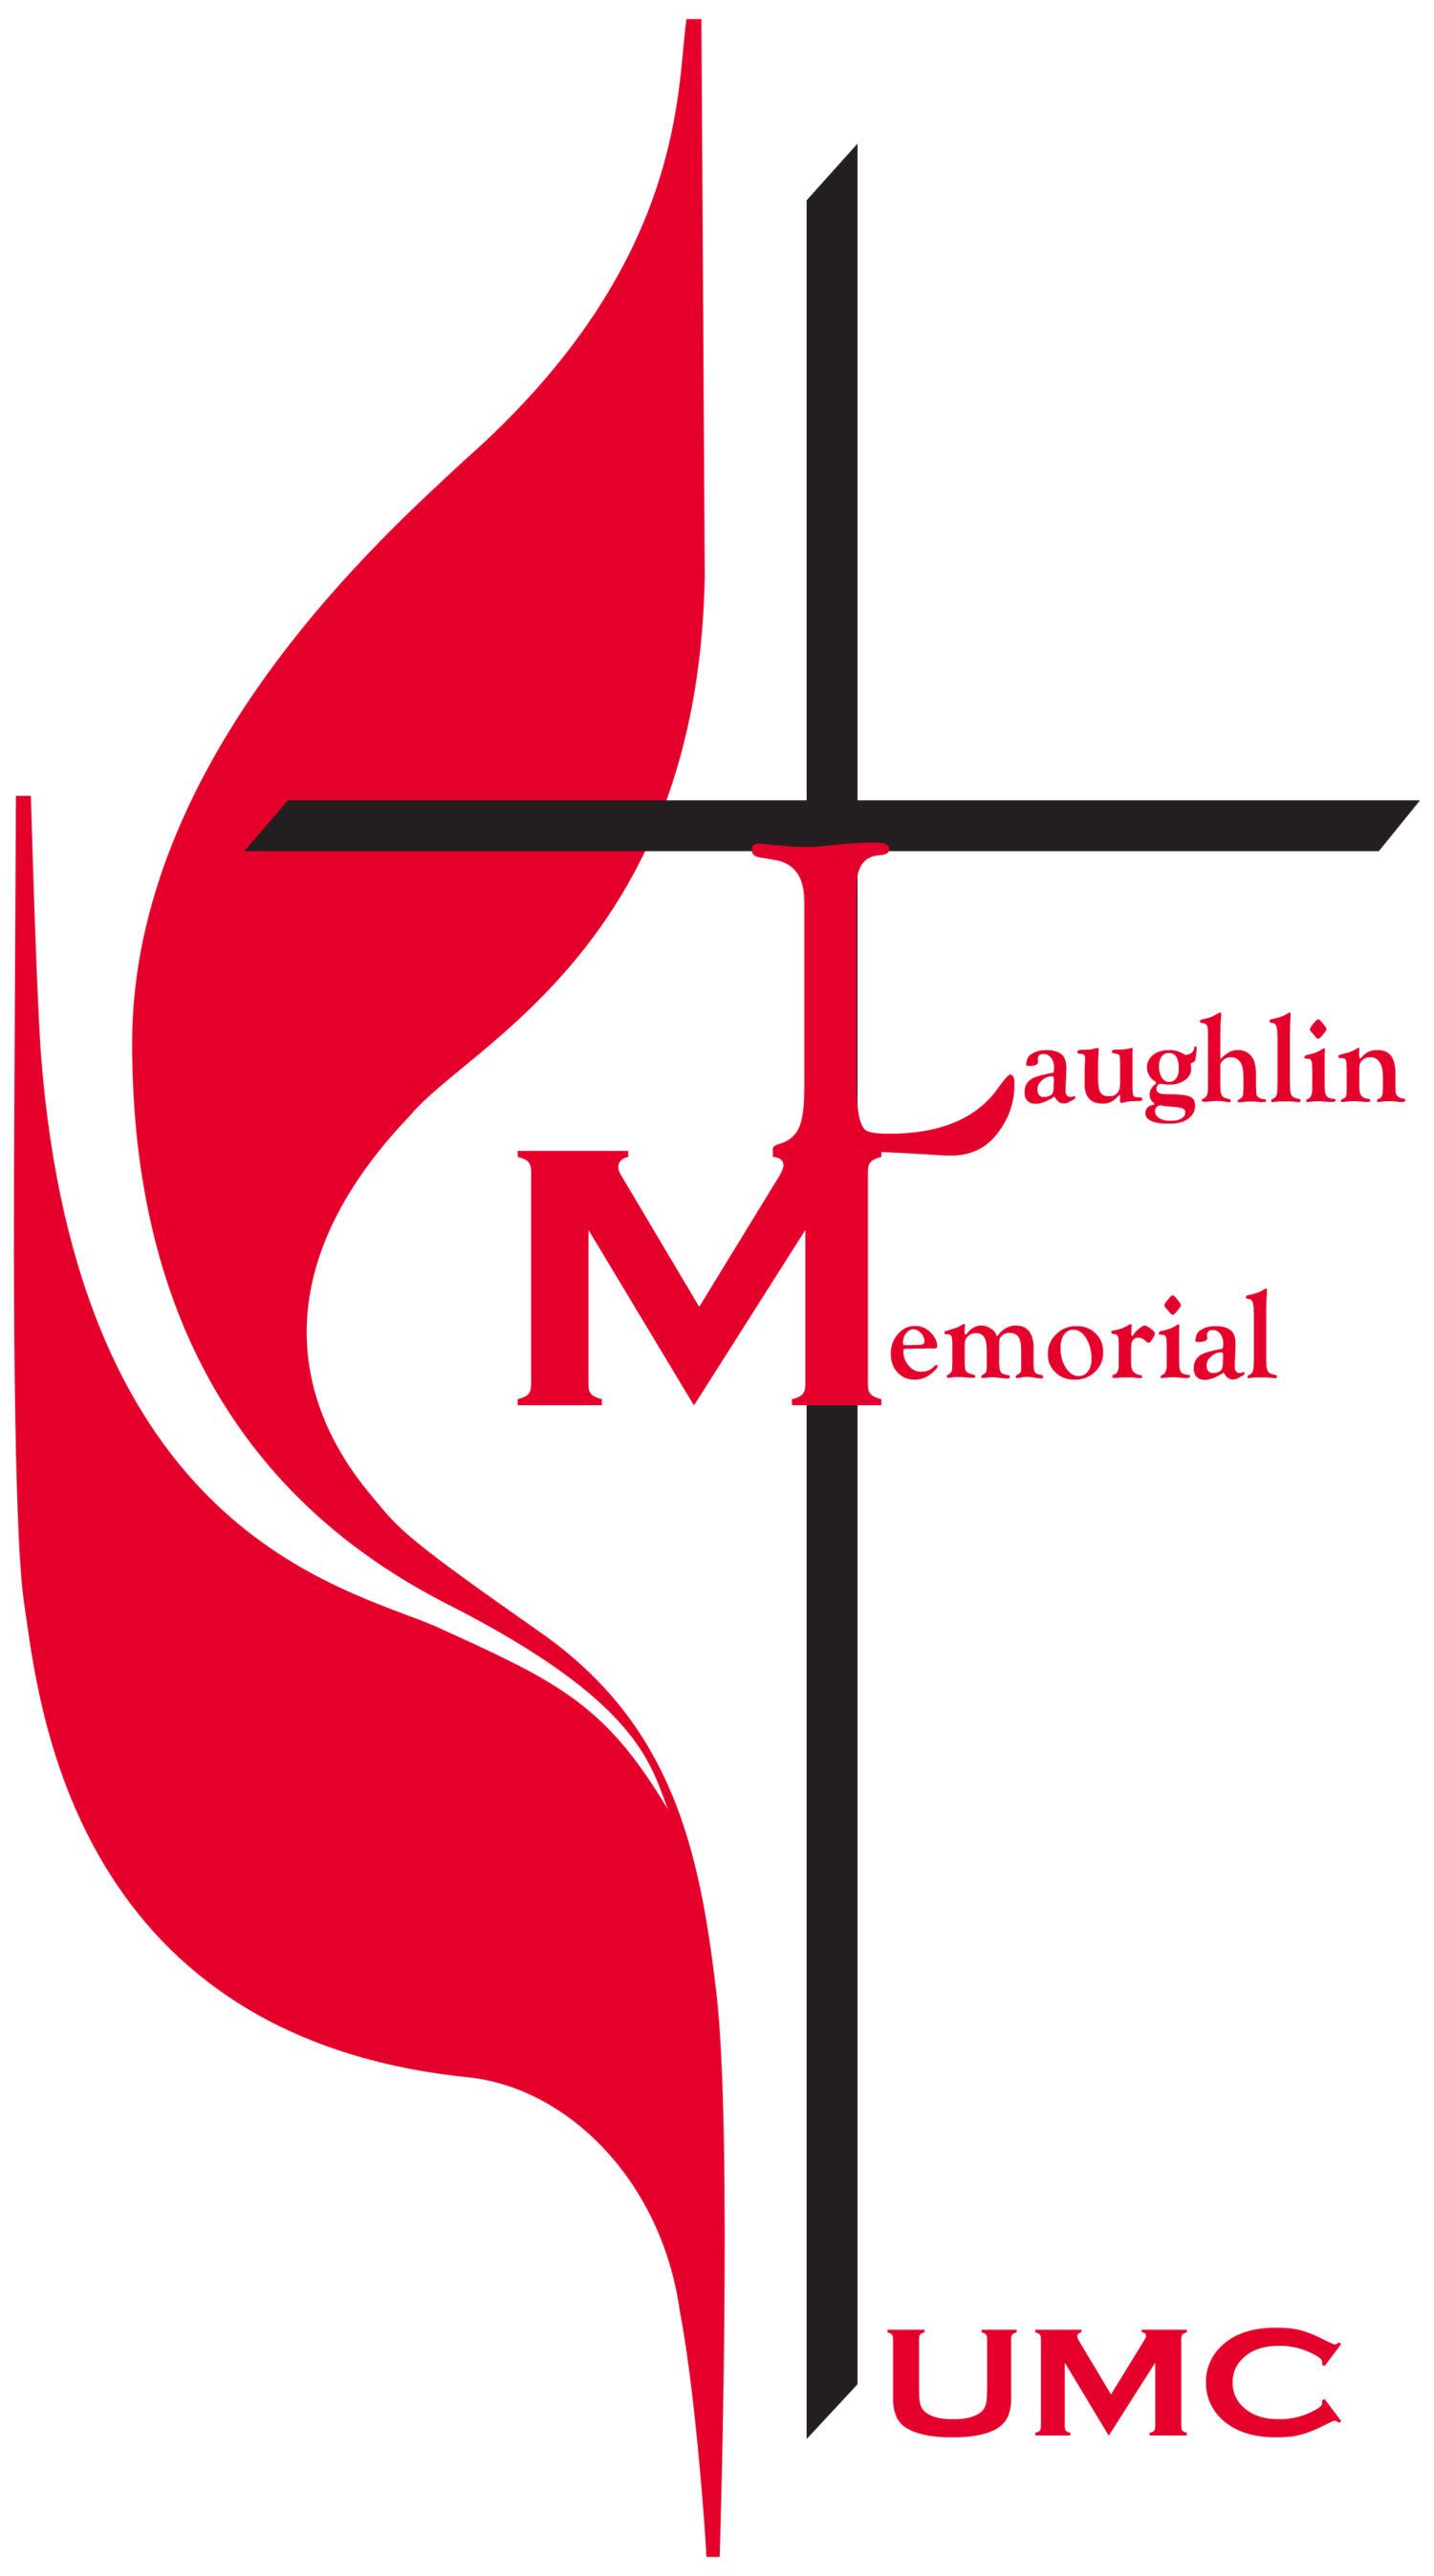 Laughlin Memorial UMC